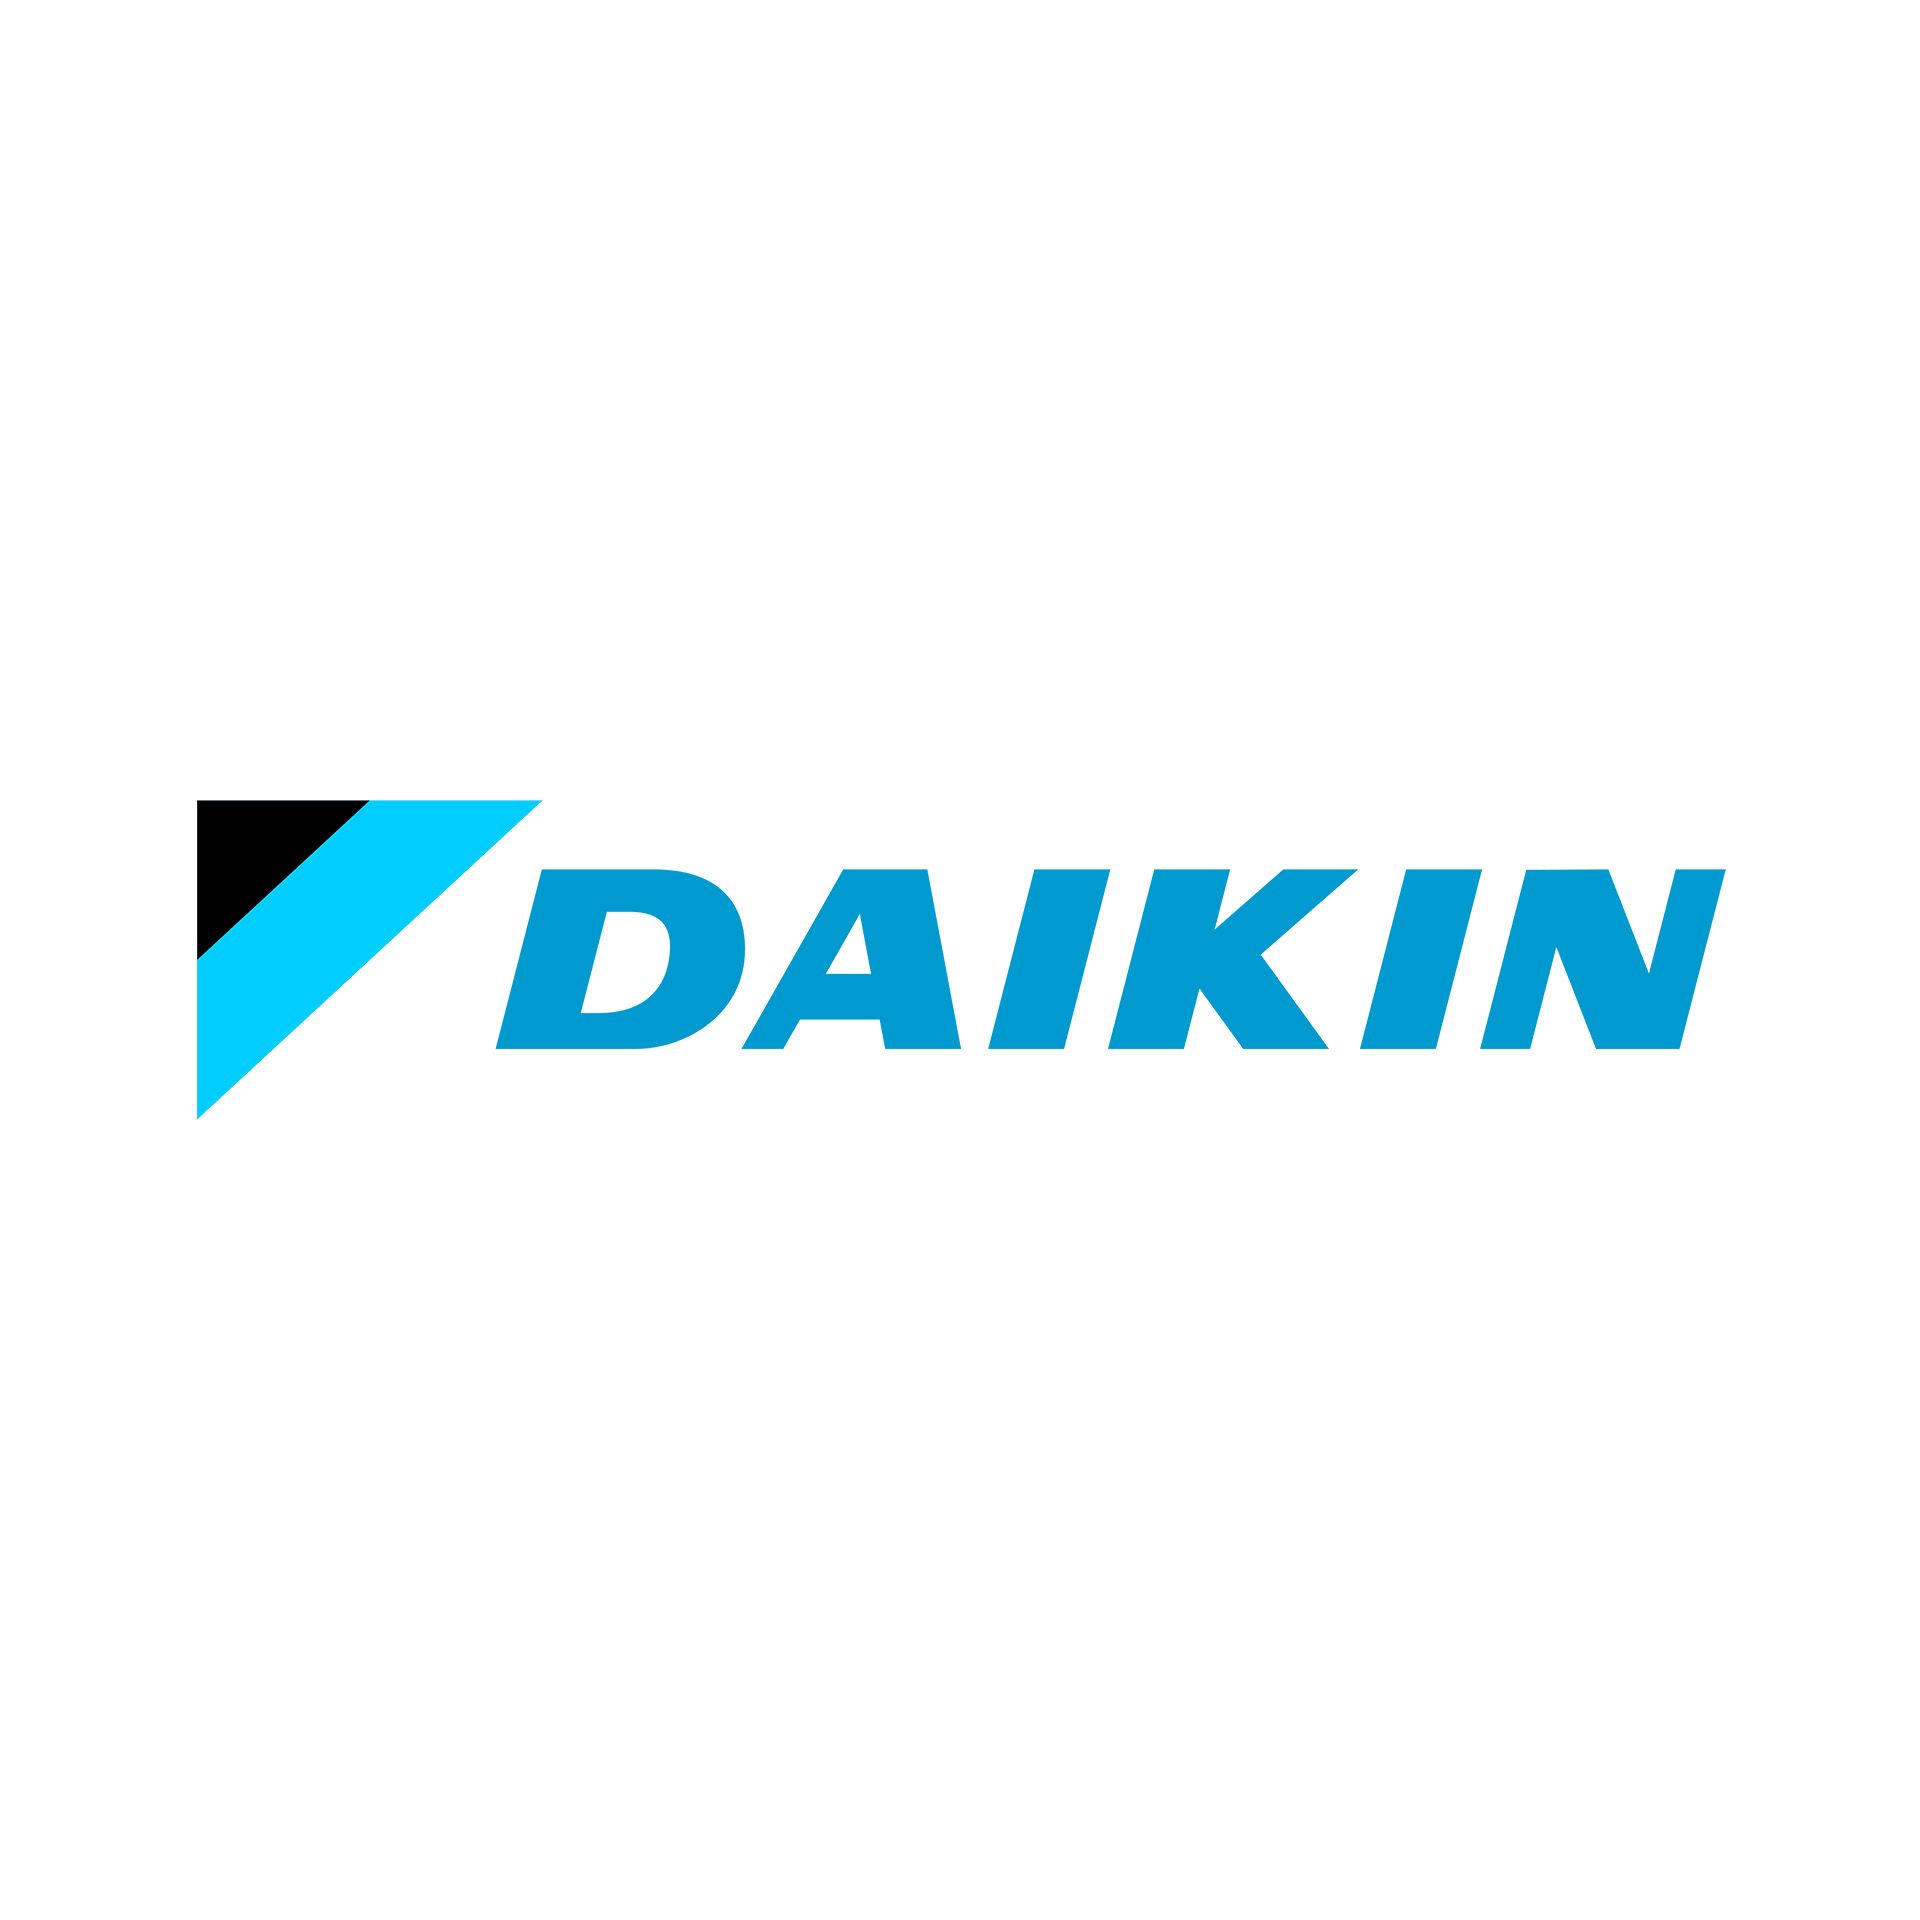 Daikin logo on white background